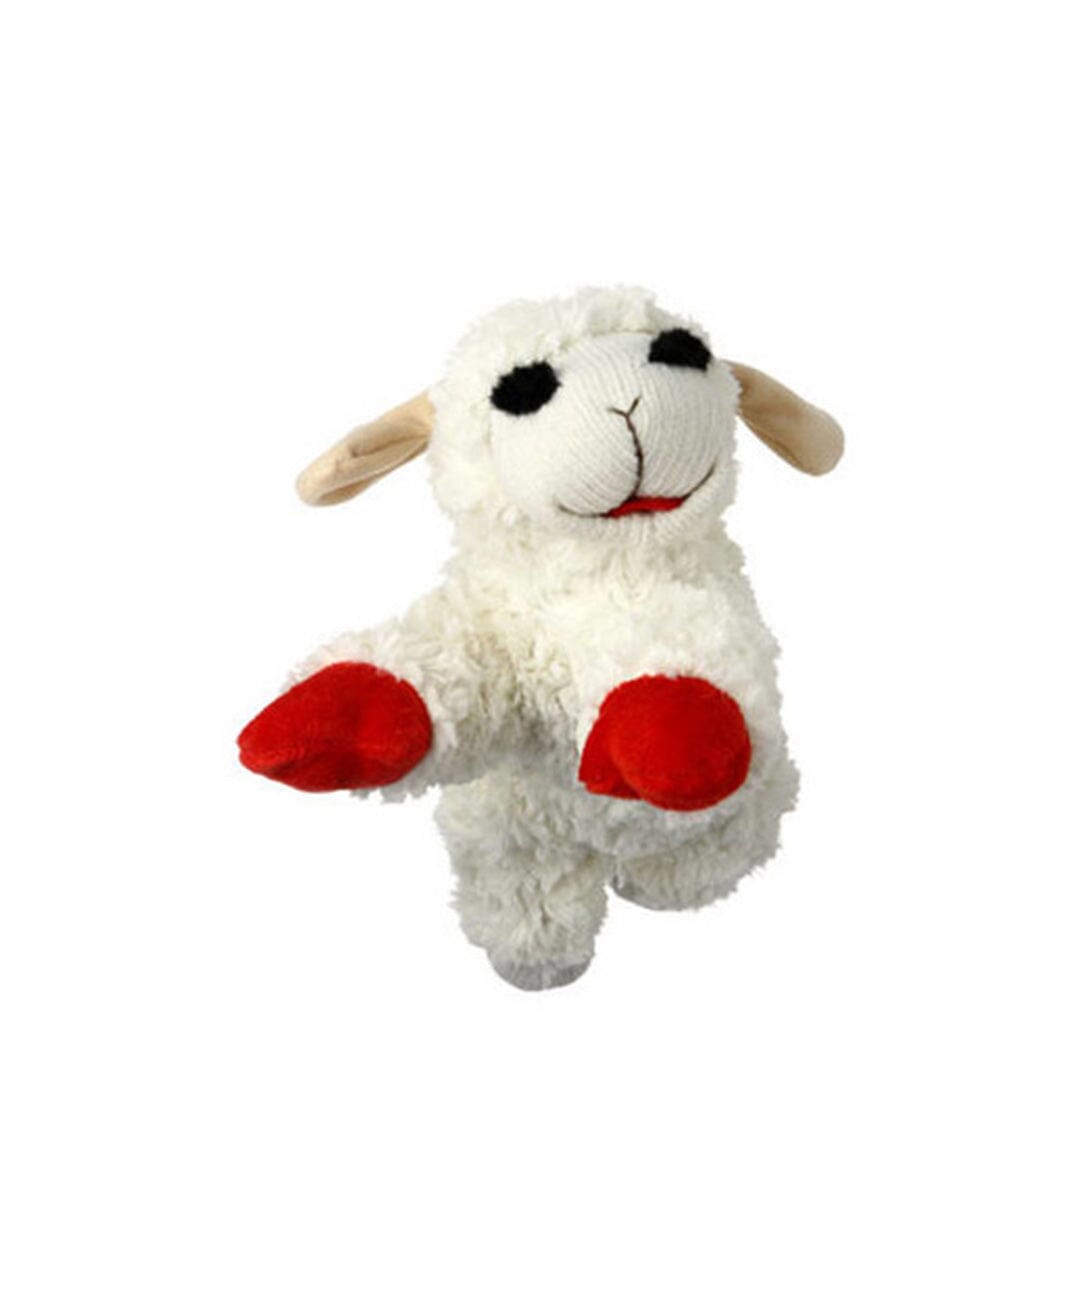 plush white  lamb chop dog toy 10.5 inches long 